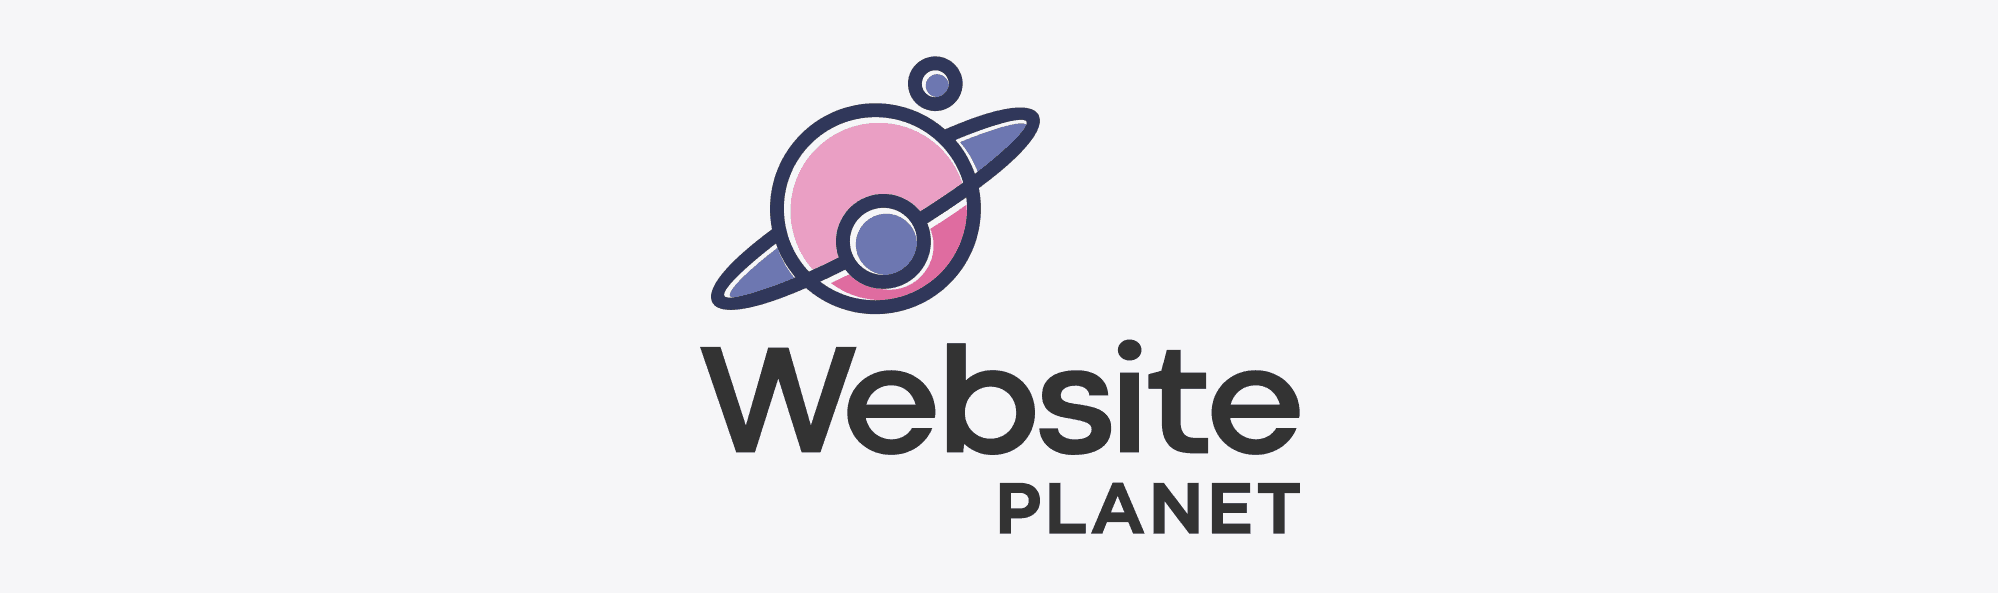 Website Planet logo sample